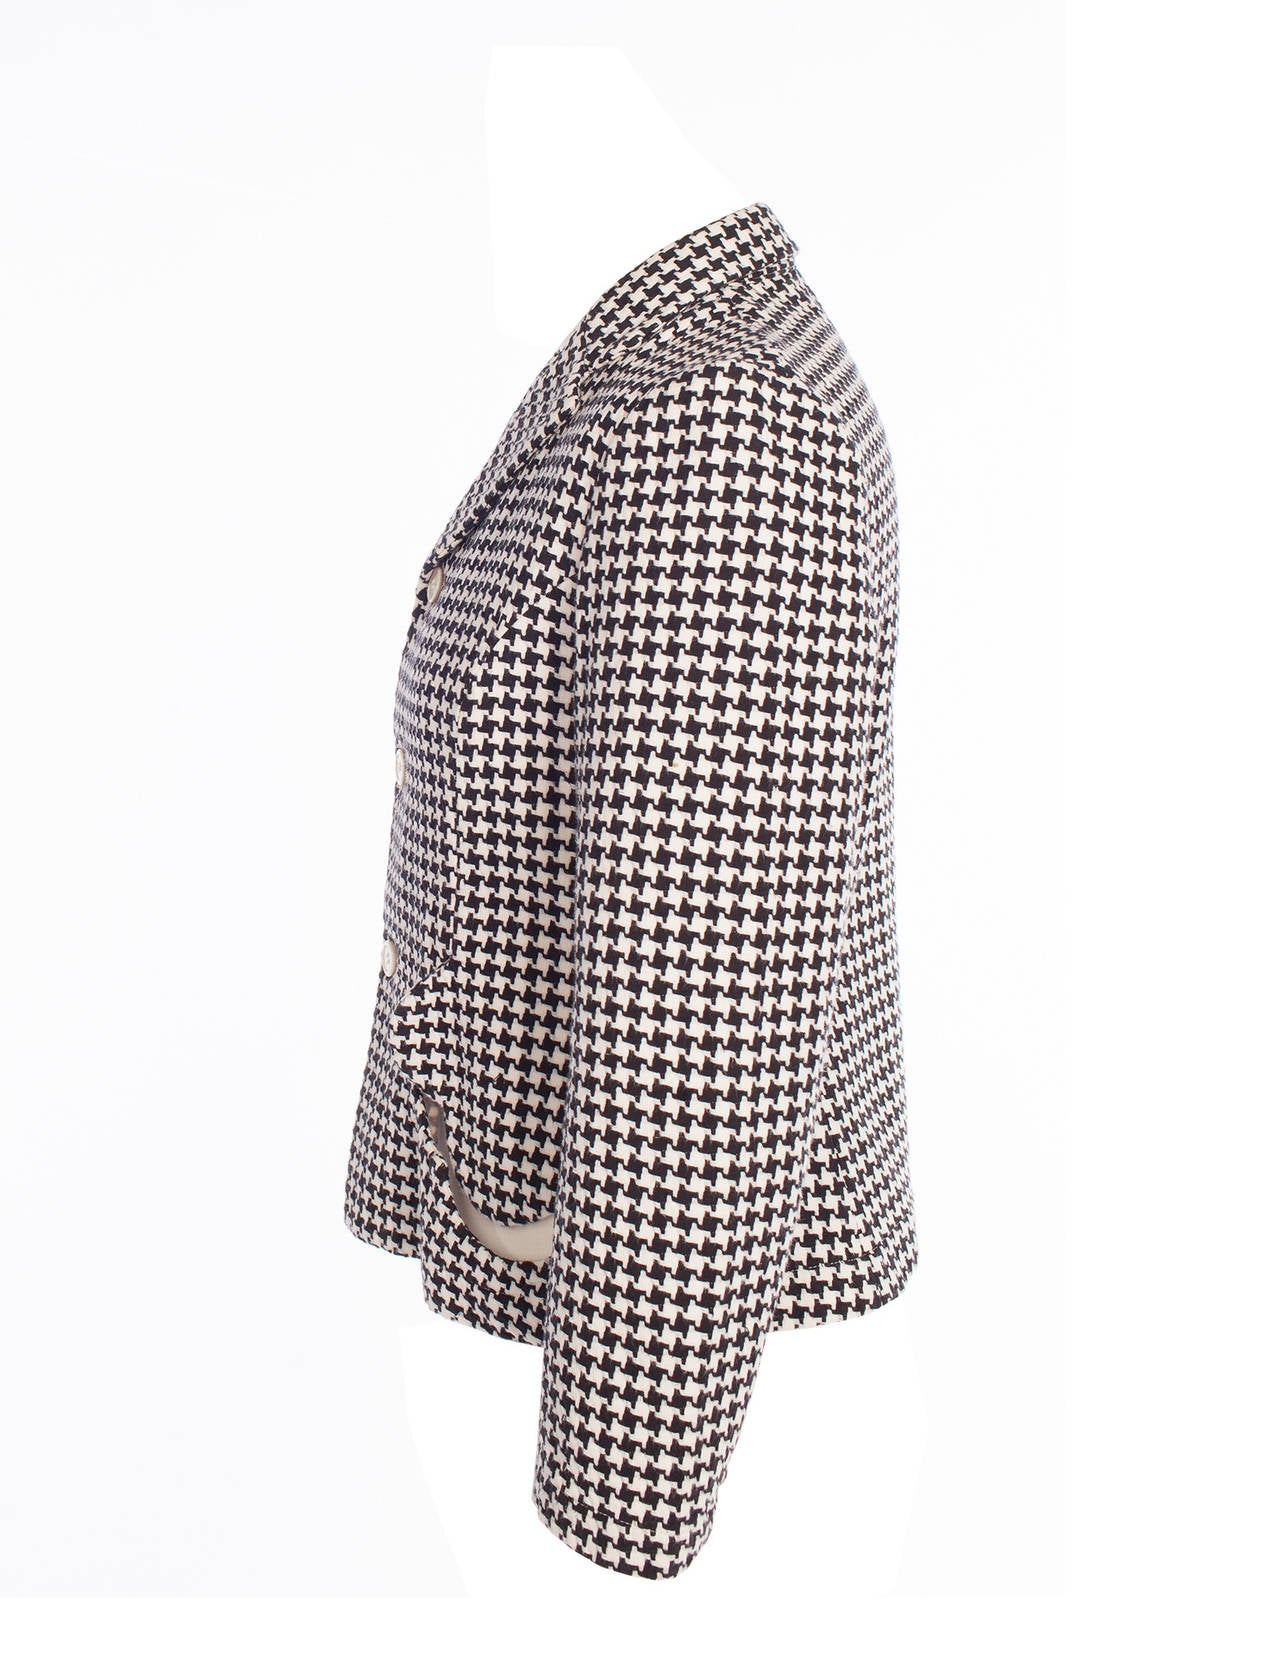 Women's Comme des Garcons *Robe de Chambre* houndstooth printed blazer, Sz. M